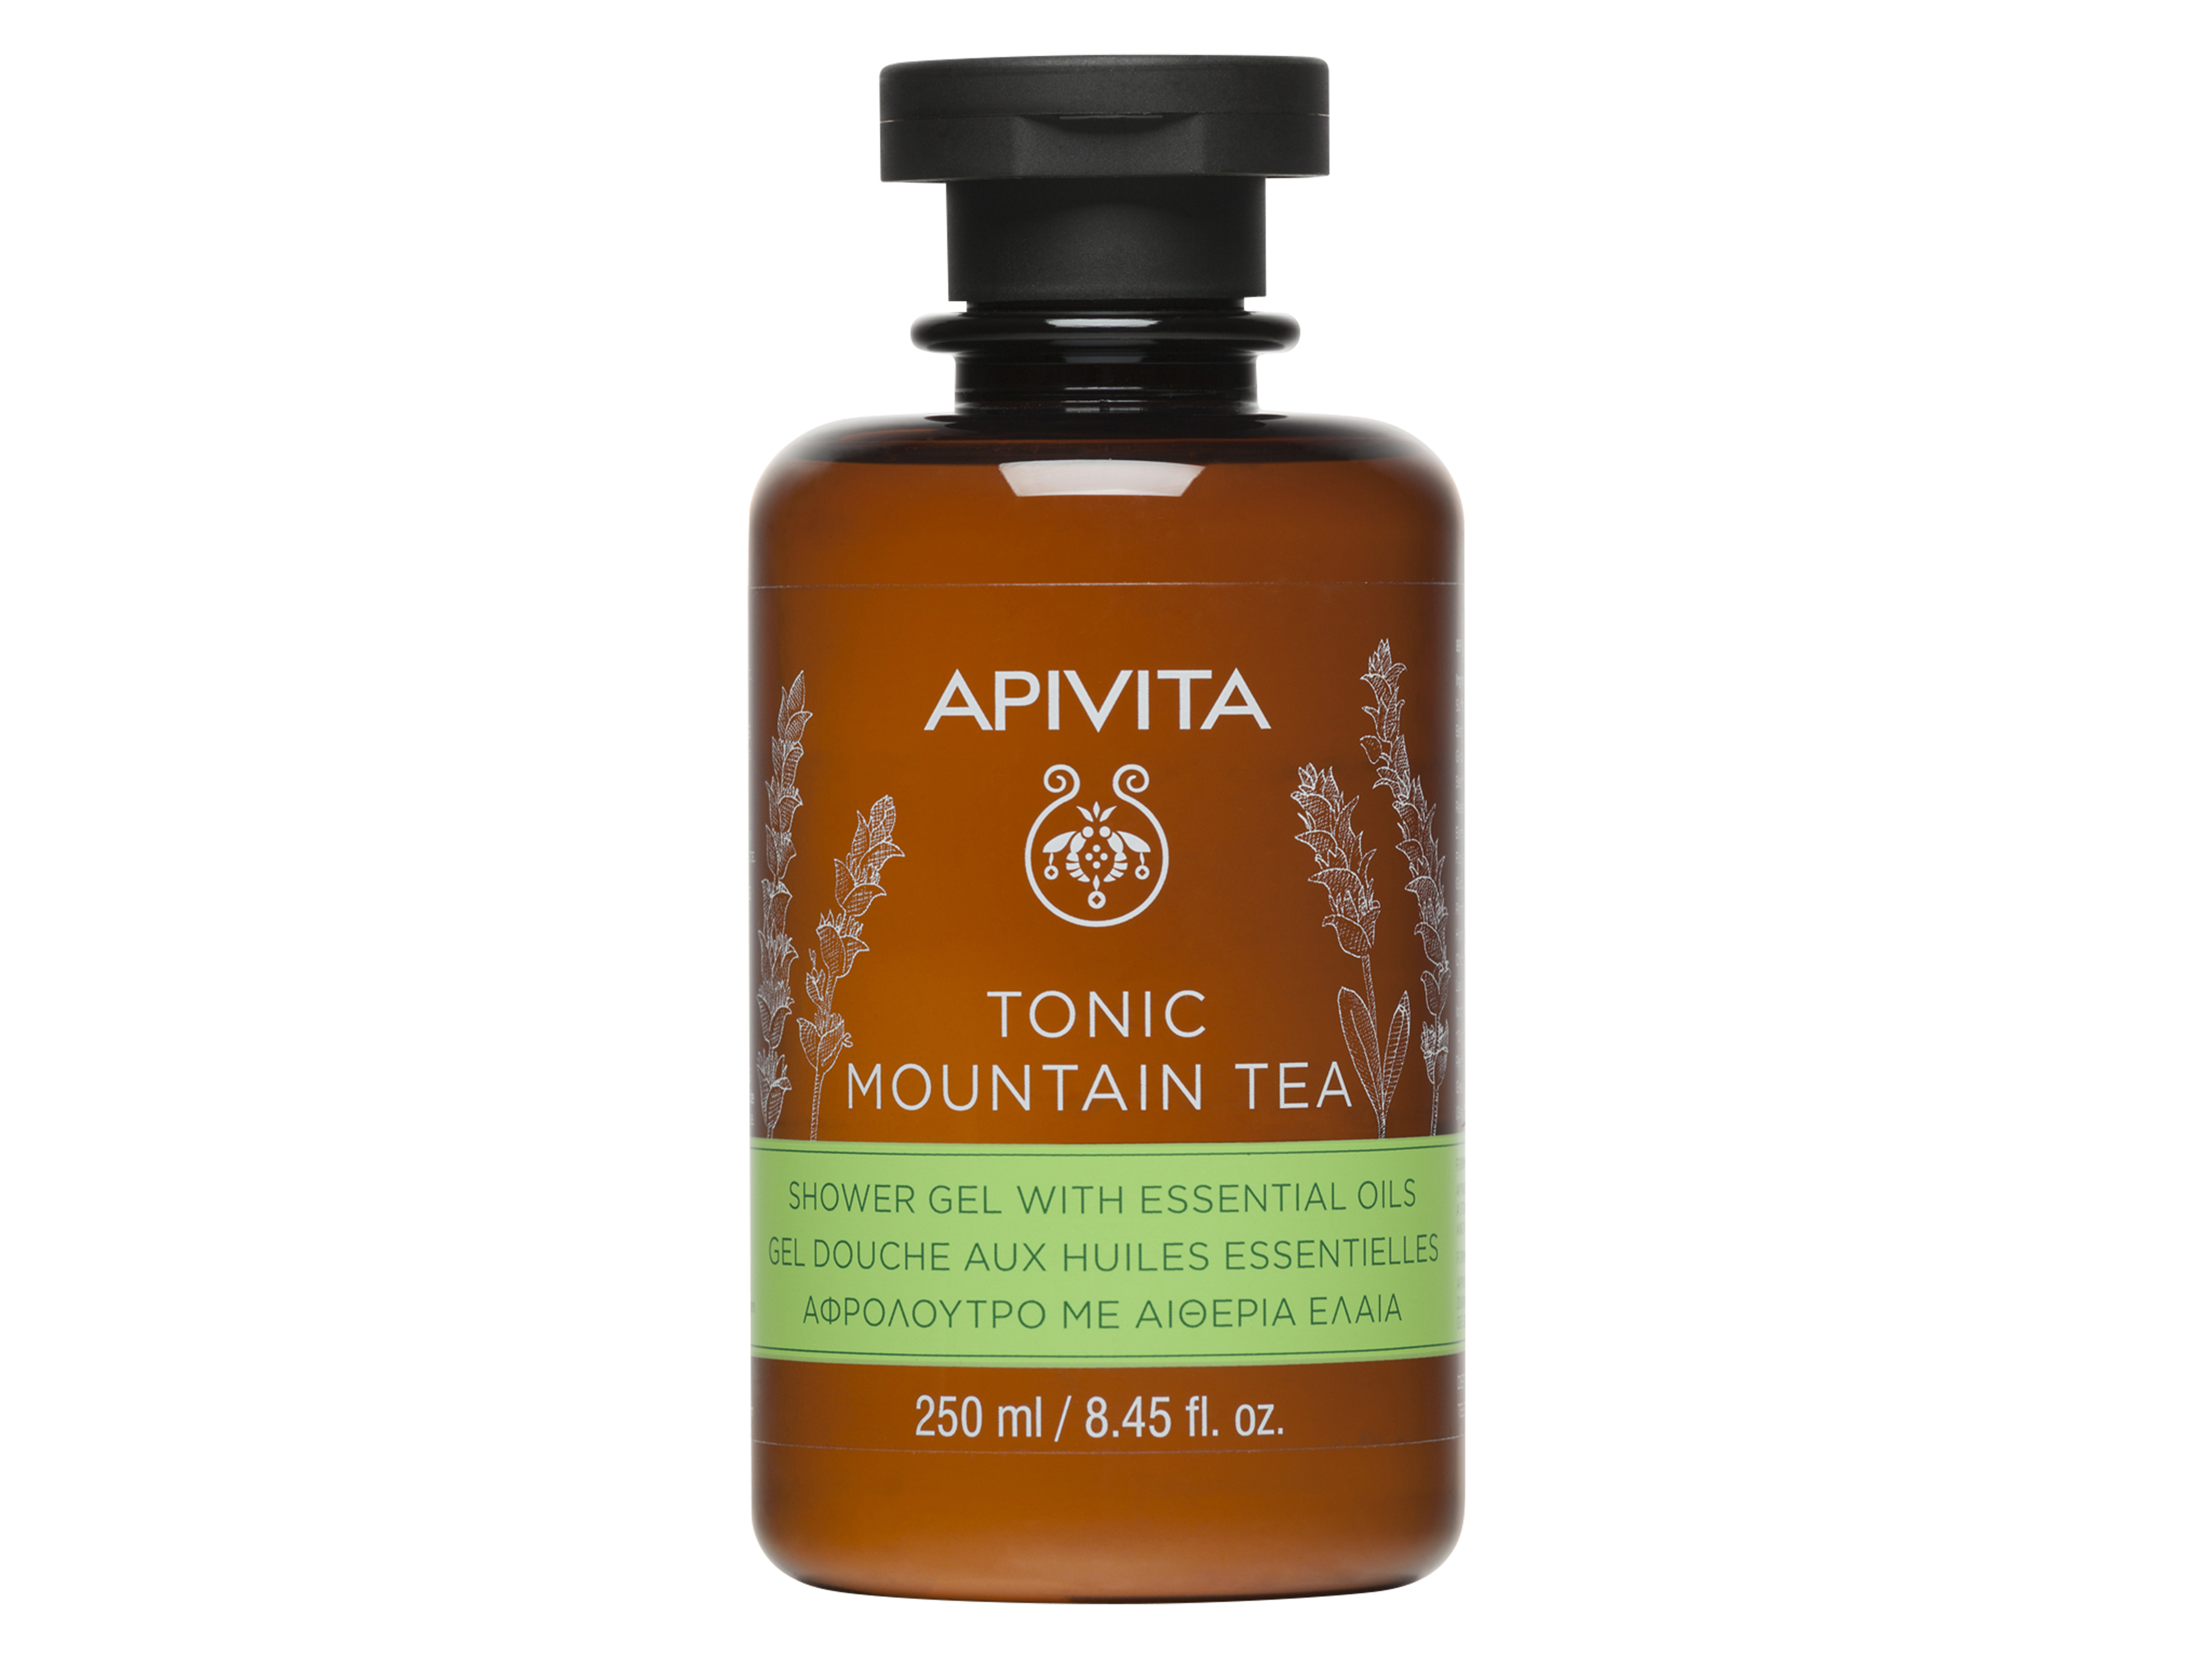 Apivita Tonic Mountain Tea Shower Gel, 250 ml